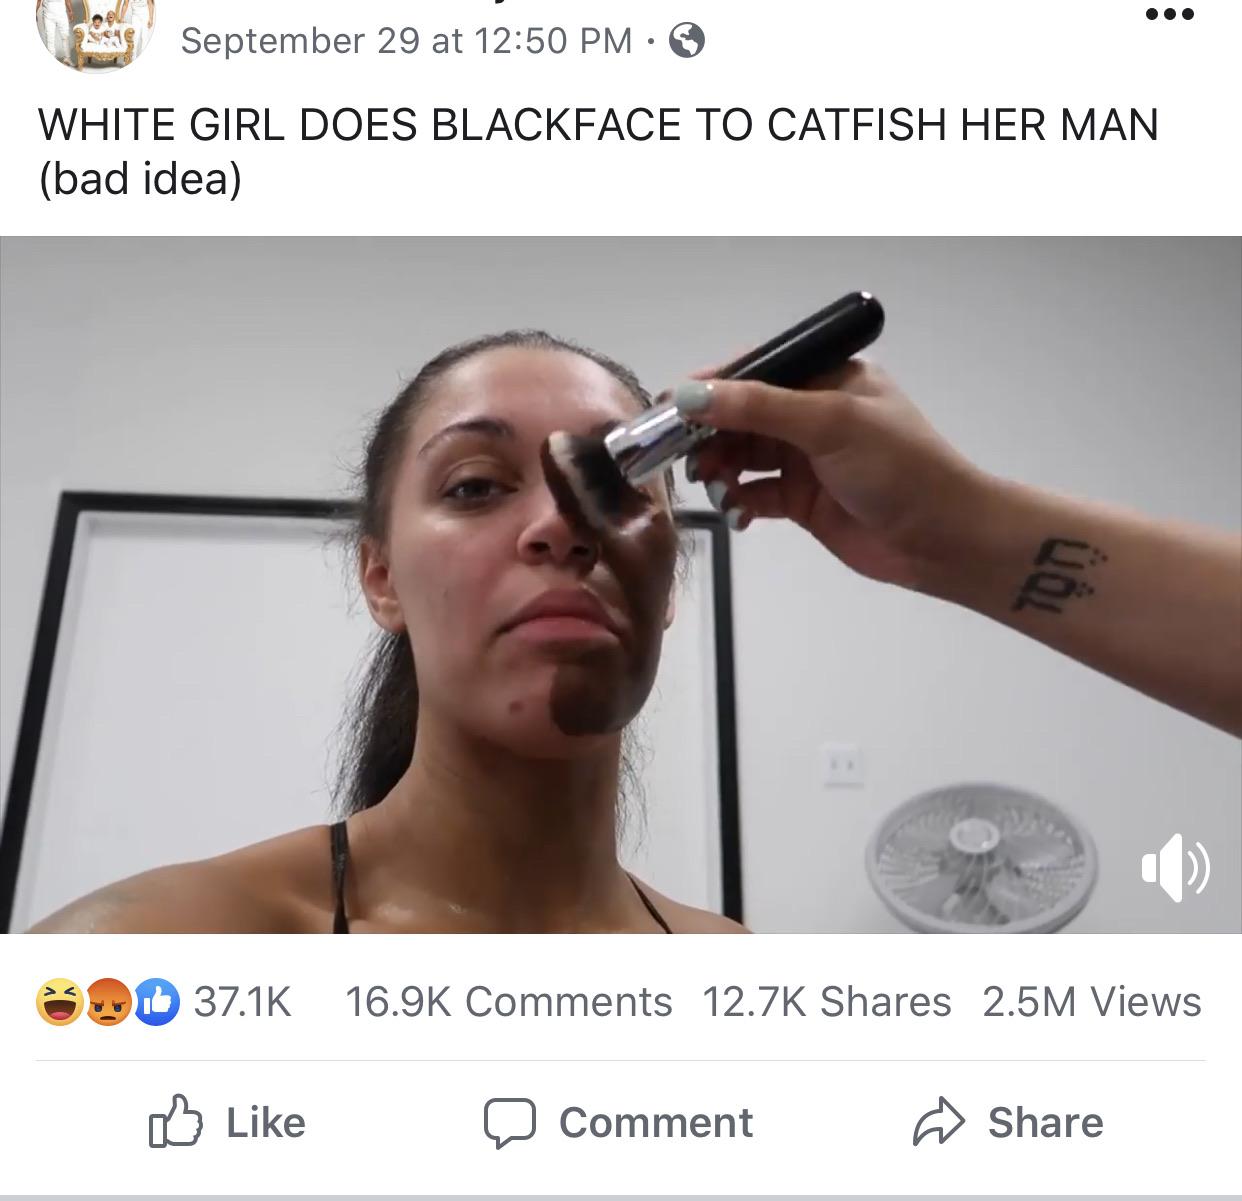 shoulder - 28 299 Sel September 29 at White Girl Does Blackface To Catfish Her Man bad idea Od 2.5M Views mm es Vs a Comment @